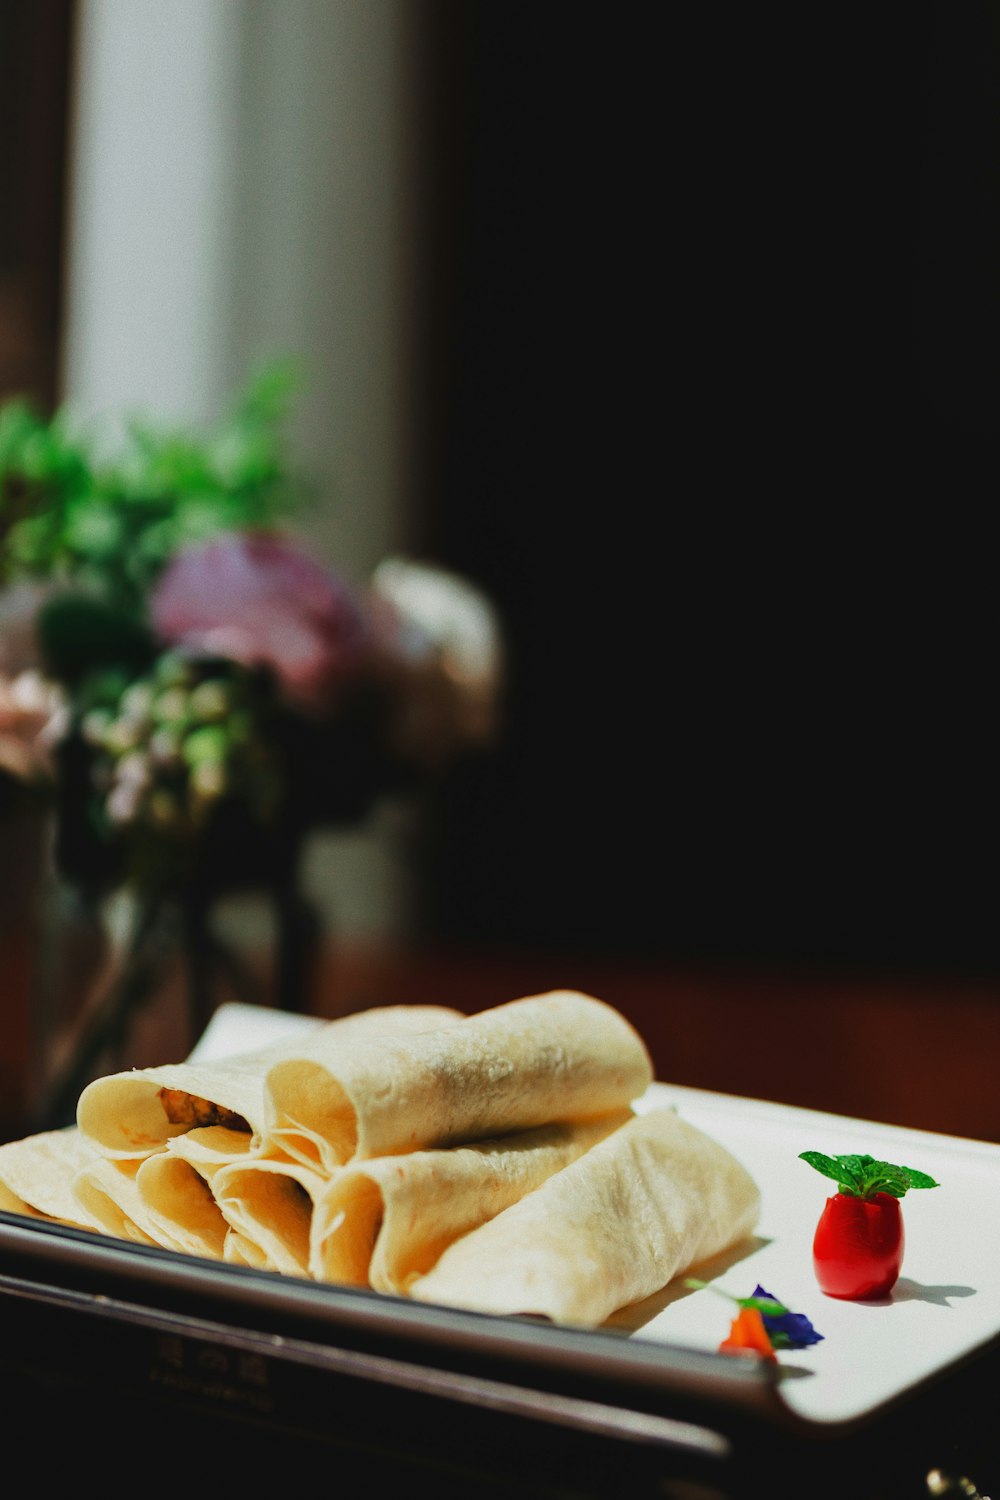 bread on white ceramic plate